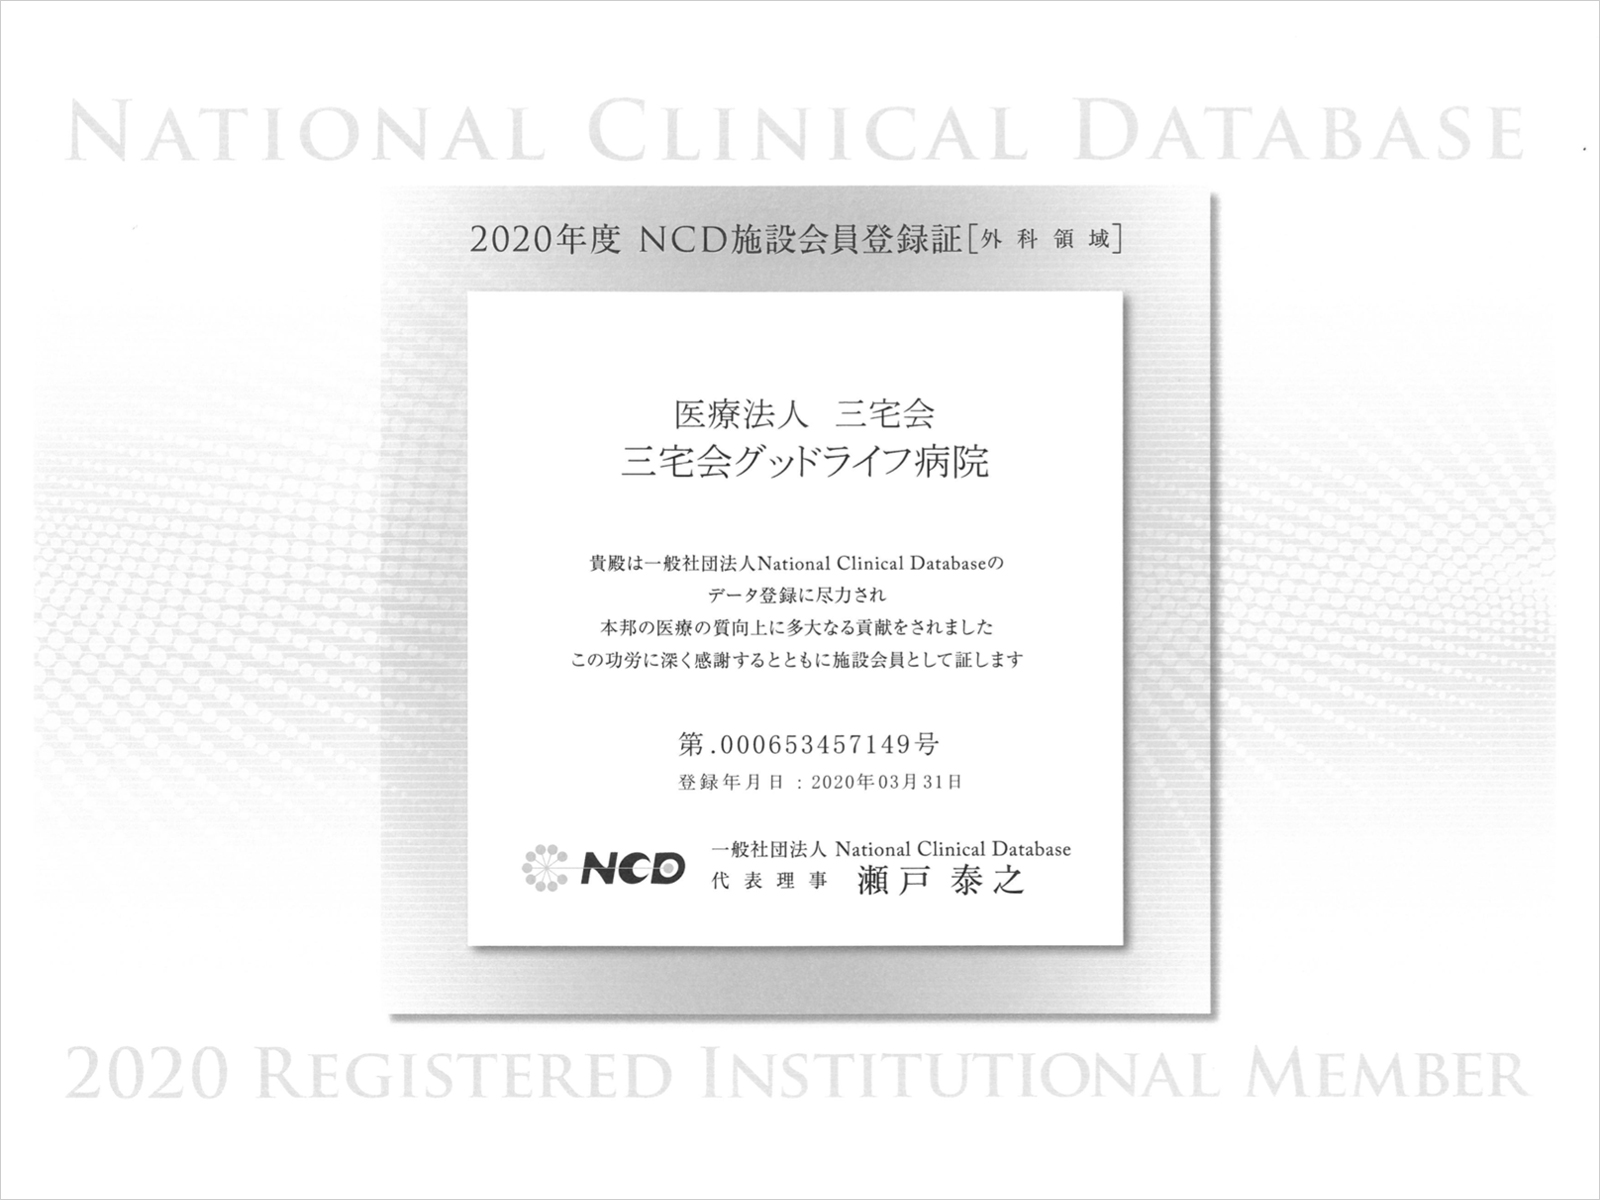 NCD登録について